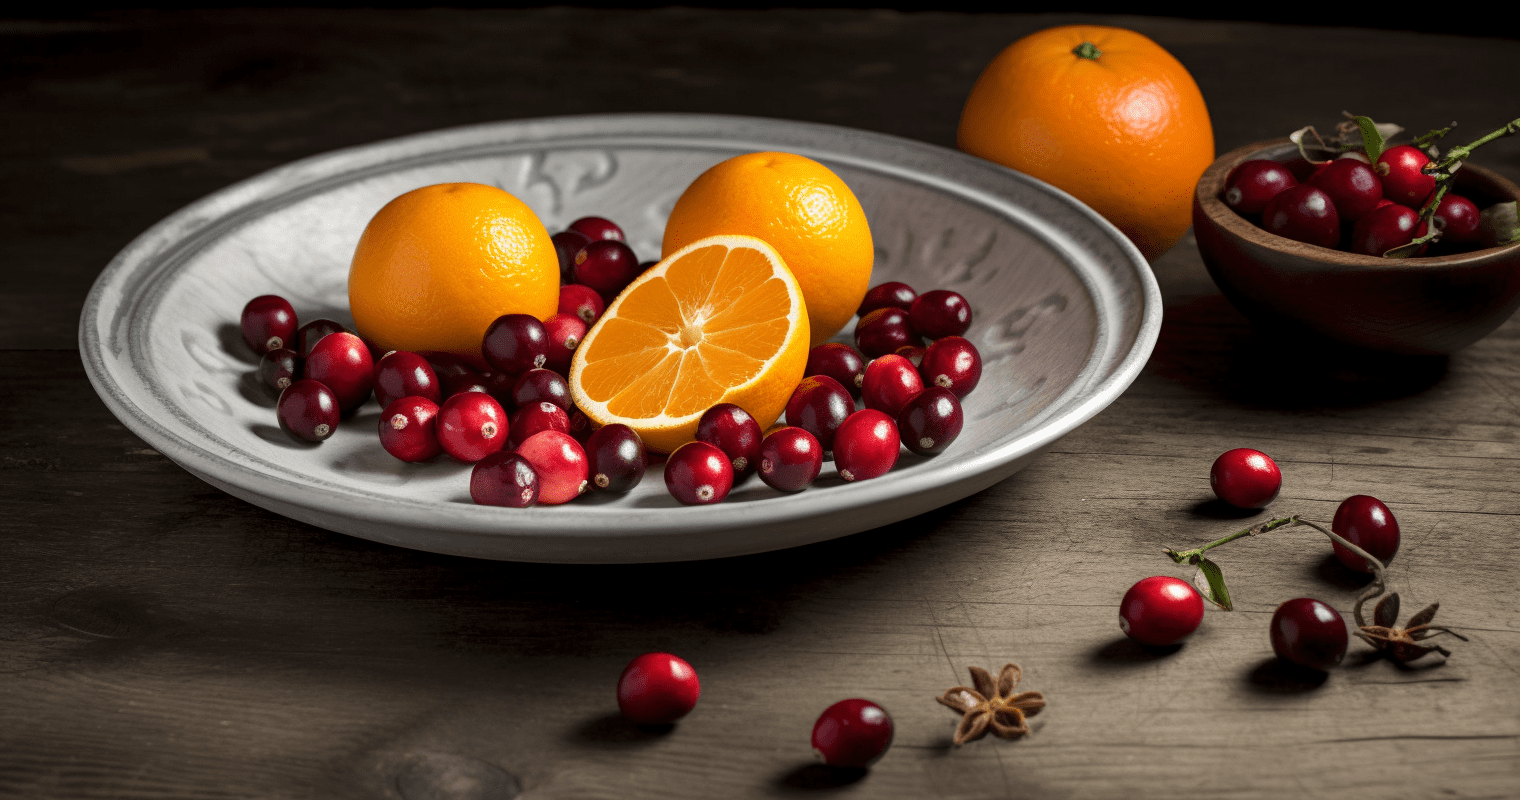 Cranberry Orange Relish Cooking Instructions